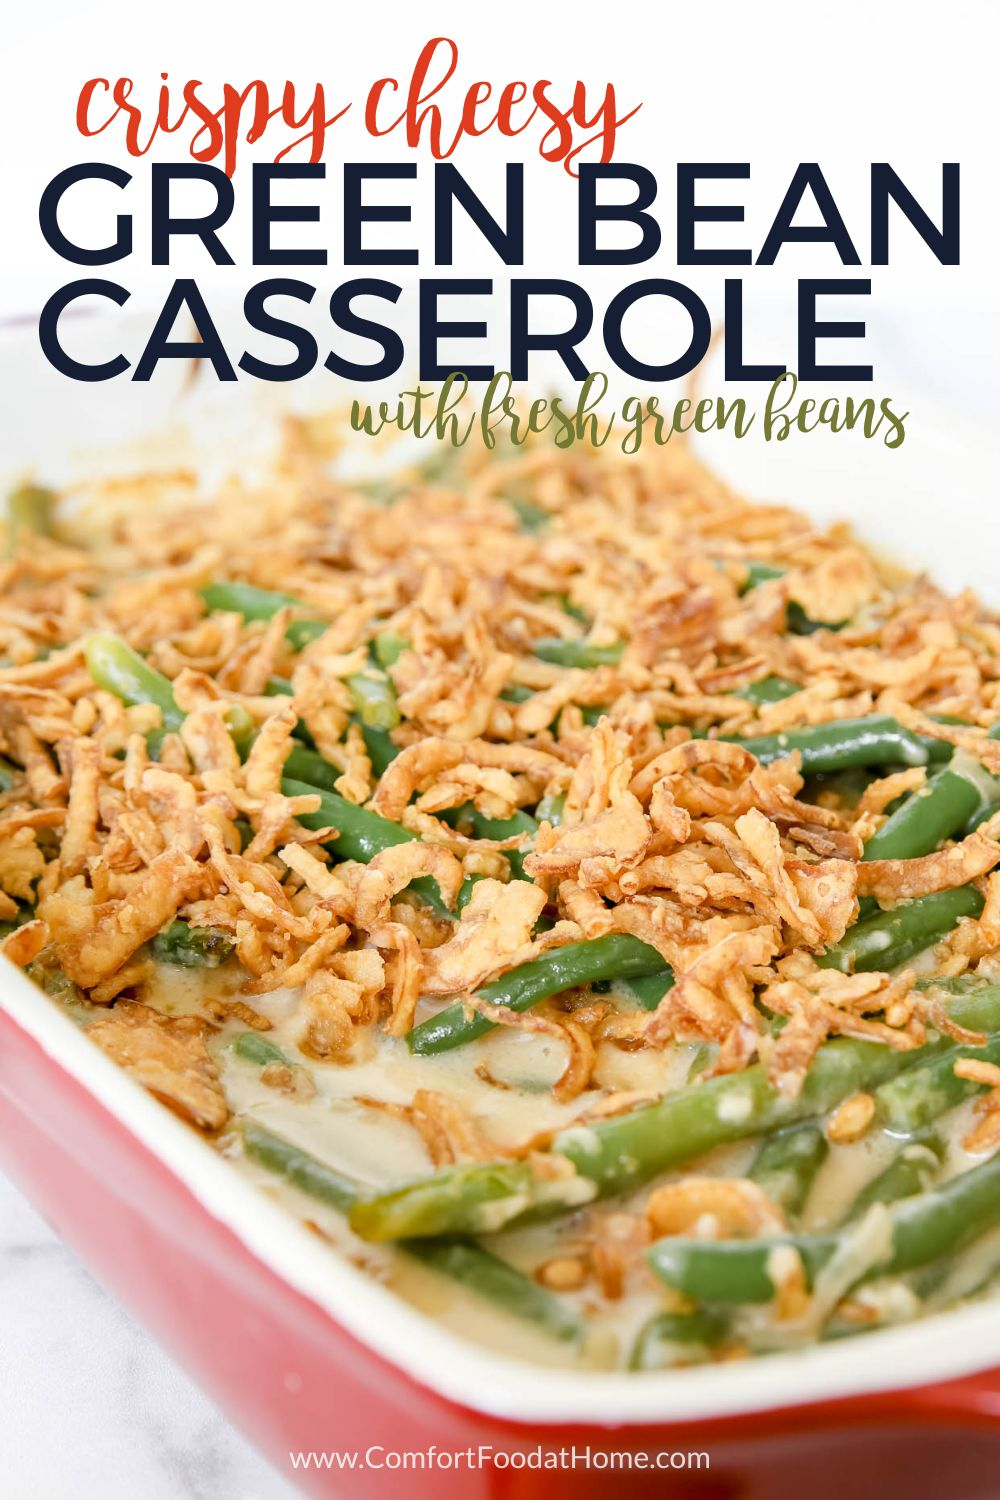 crispy, cheesy green bean casserole with fresh green beans